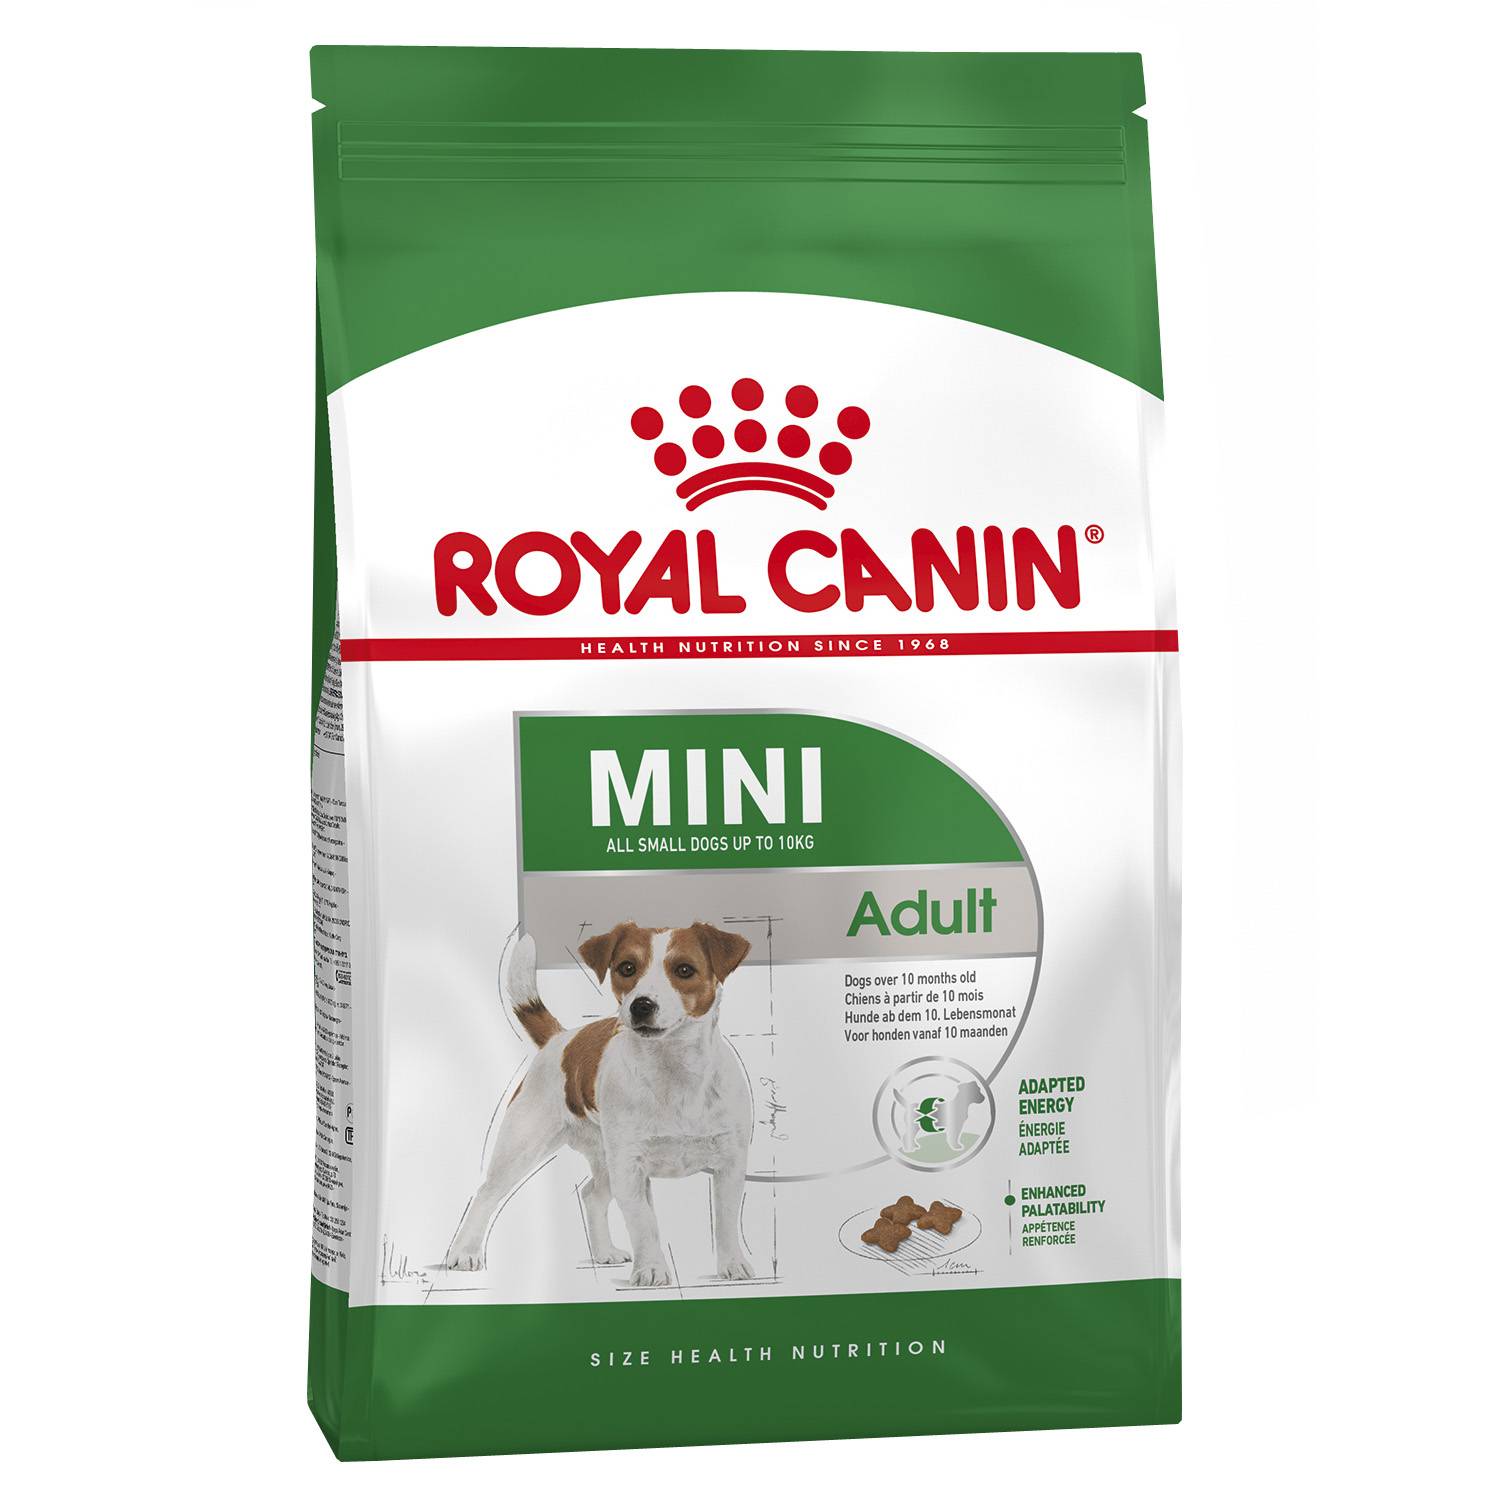 Royal Canin Mini Adult д/соб 